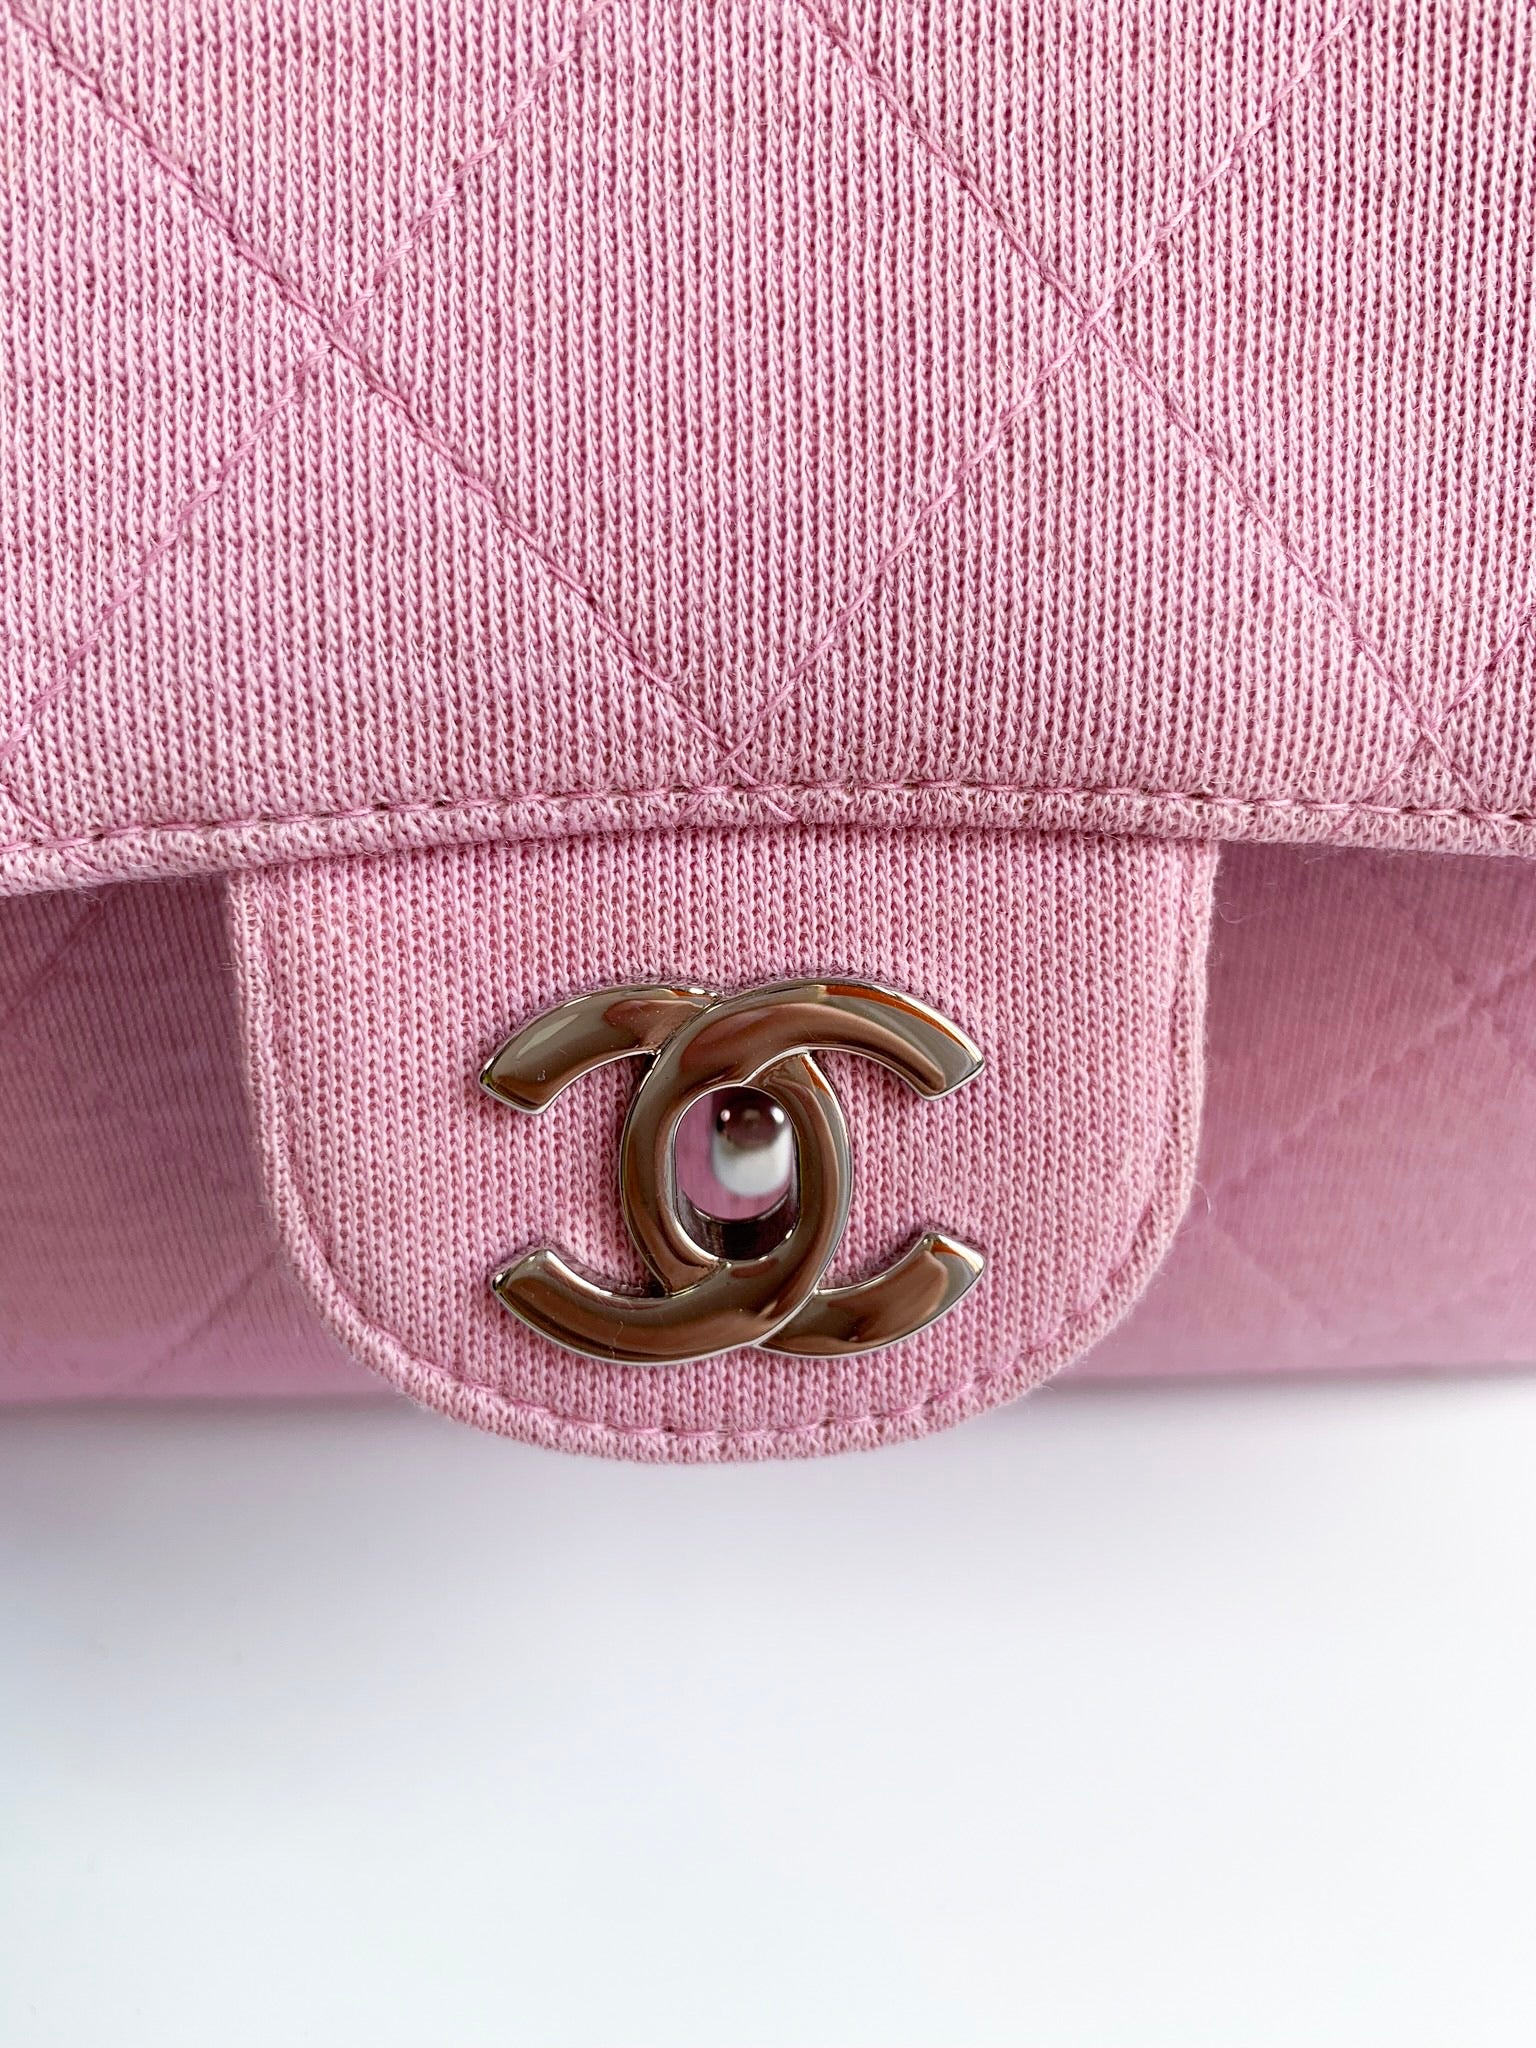 Chanel Patchwork Classic Medium Single Flap Bag